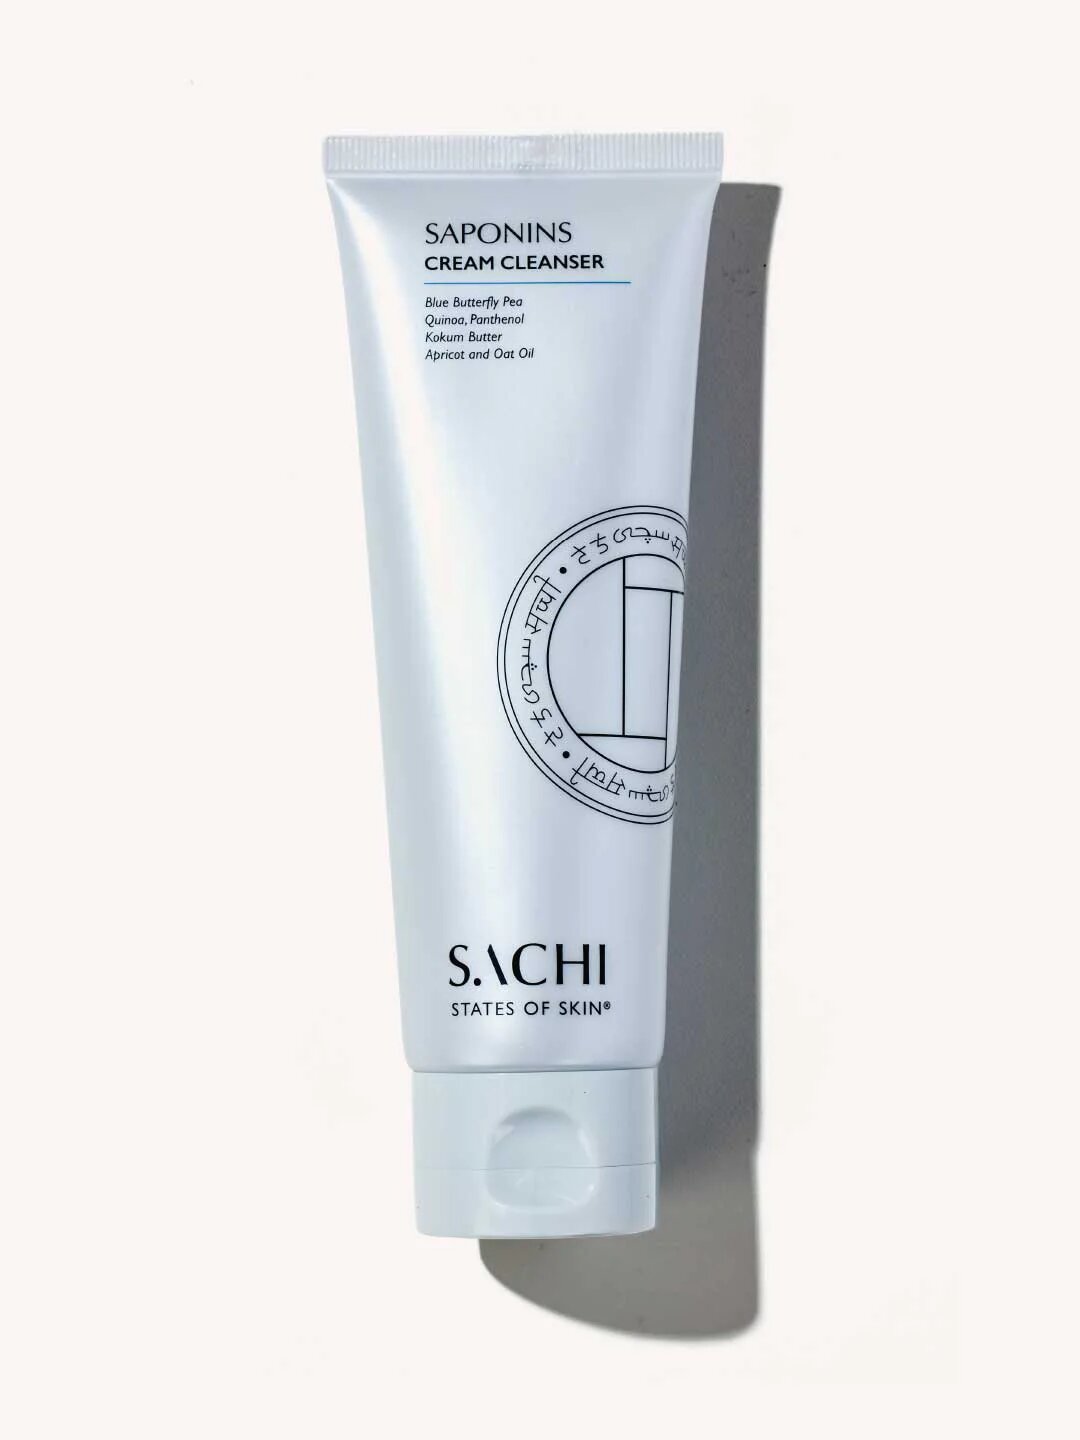 Sachi Skin + Saponins Cream Cleanser